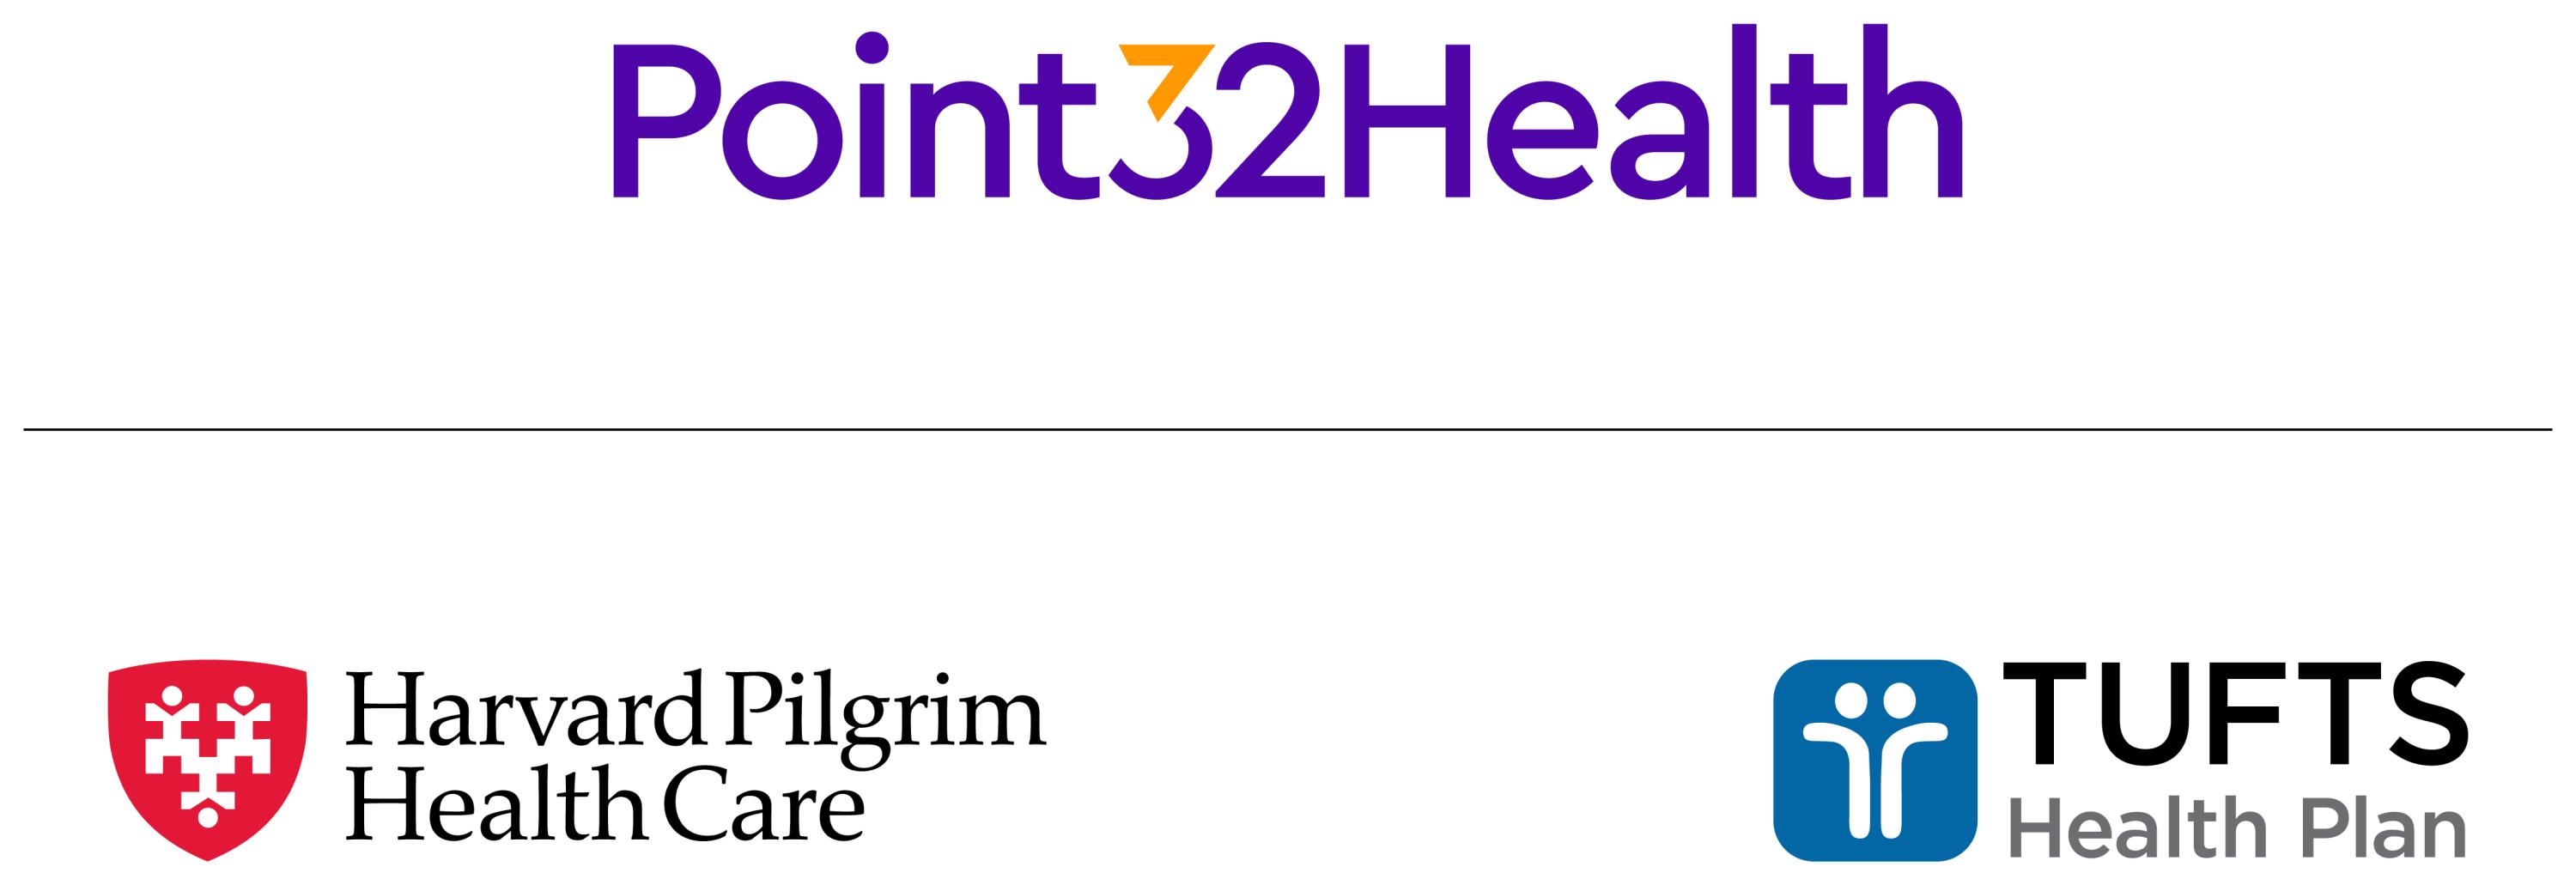 Point 32 Health Harvard and Tufts logos